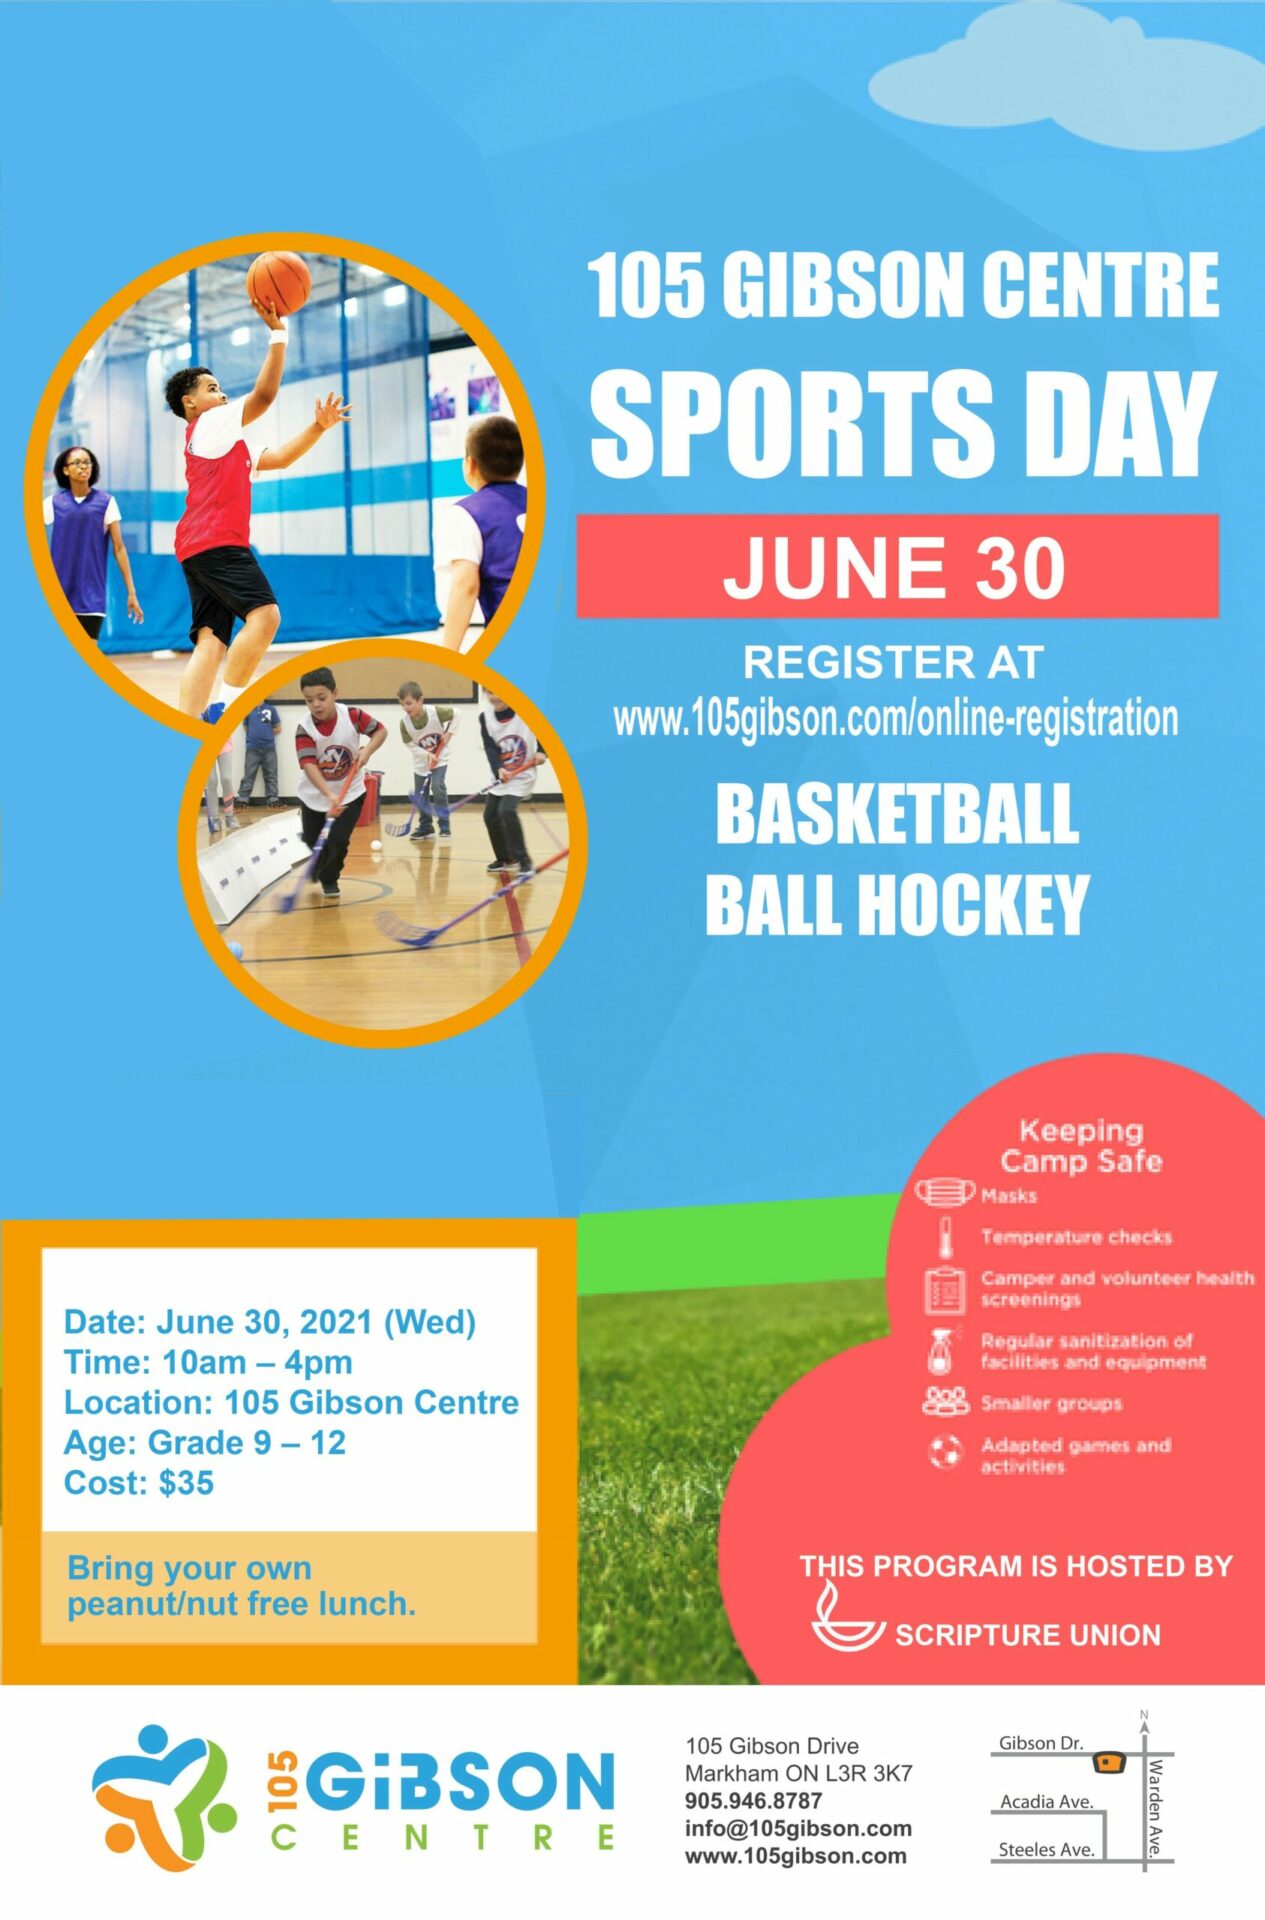 105 Gubson Centre - Sports Day June 30, 2021 - Basketball, Ball Hockey